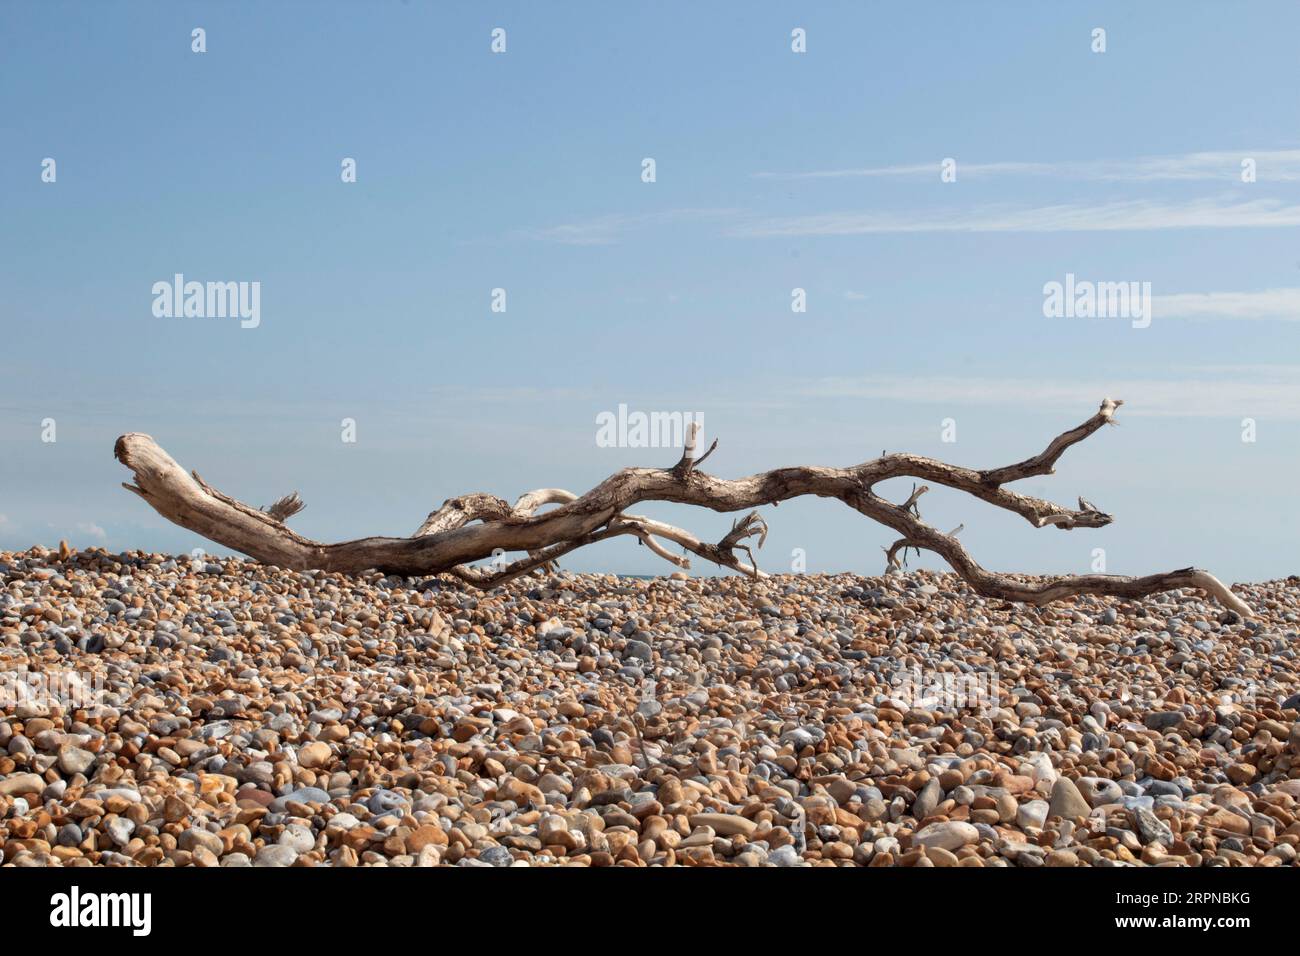 Toter Ast am Kieselstrand an der Küste in Dungeness, Kent. England Großbritannien Stockfoto